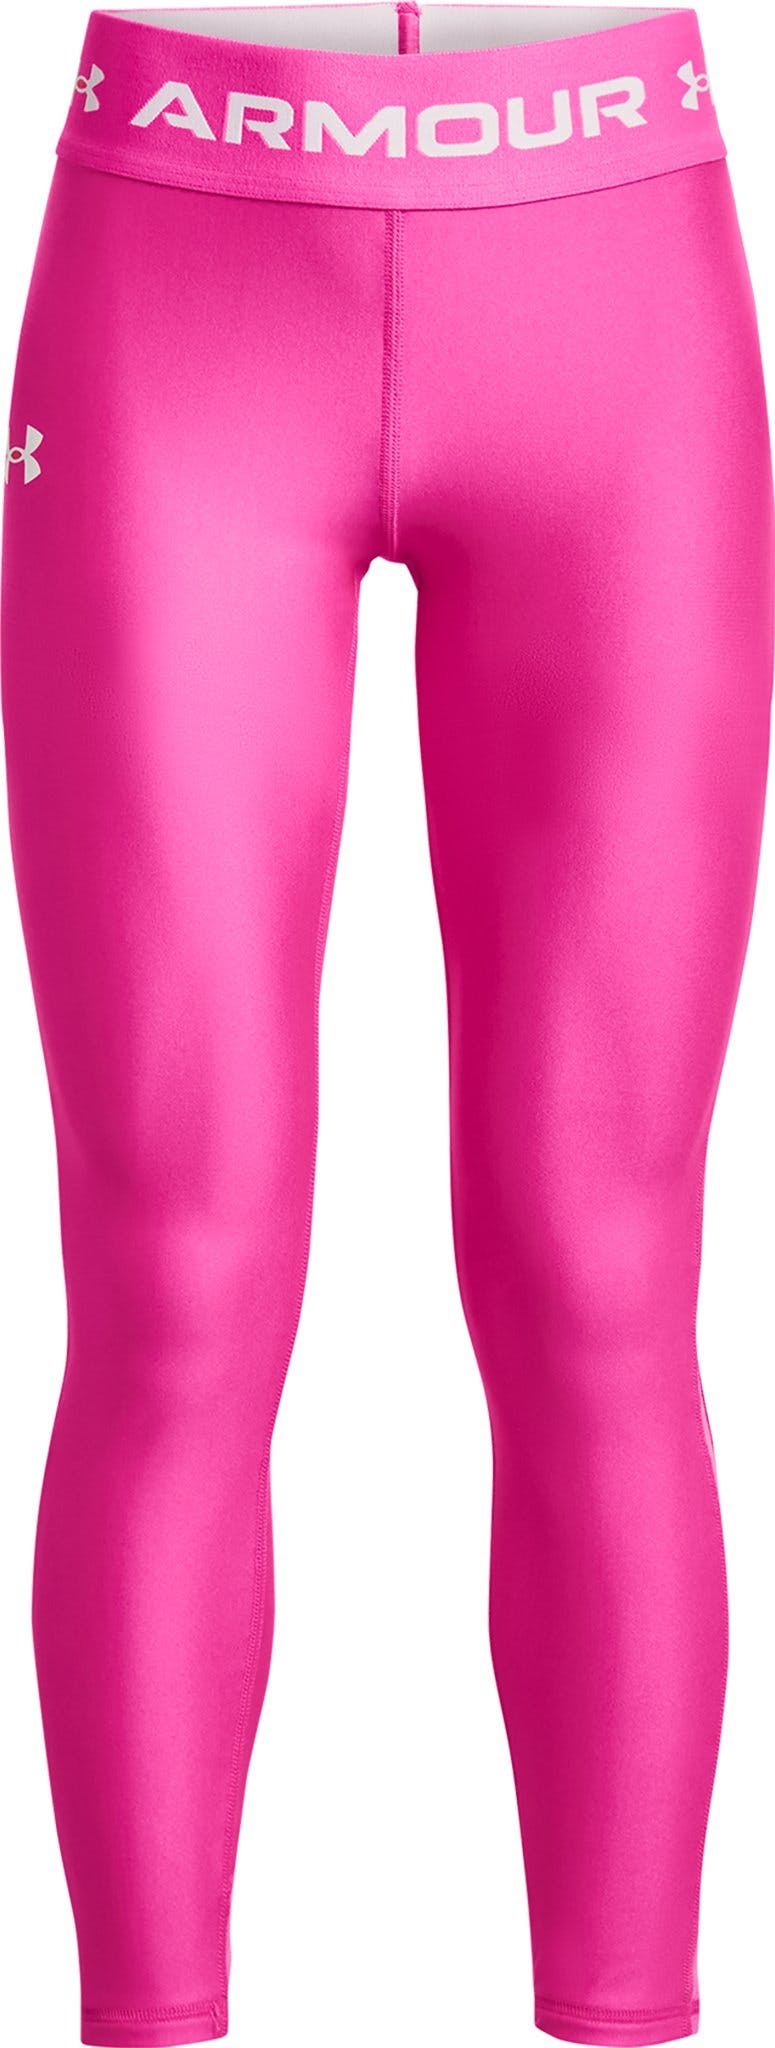 Product image for HeatGear Armour Leggings - Girls